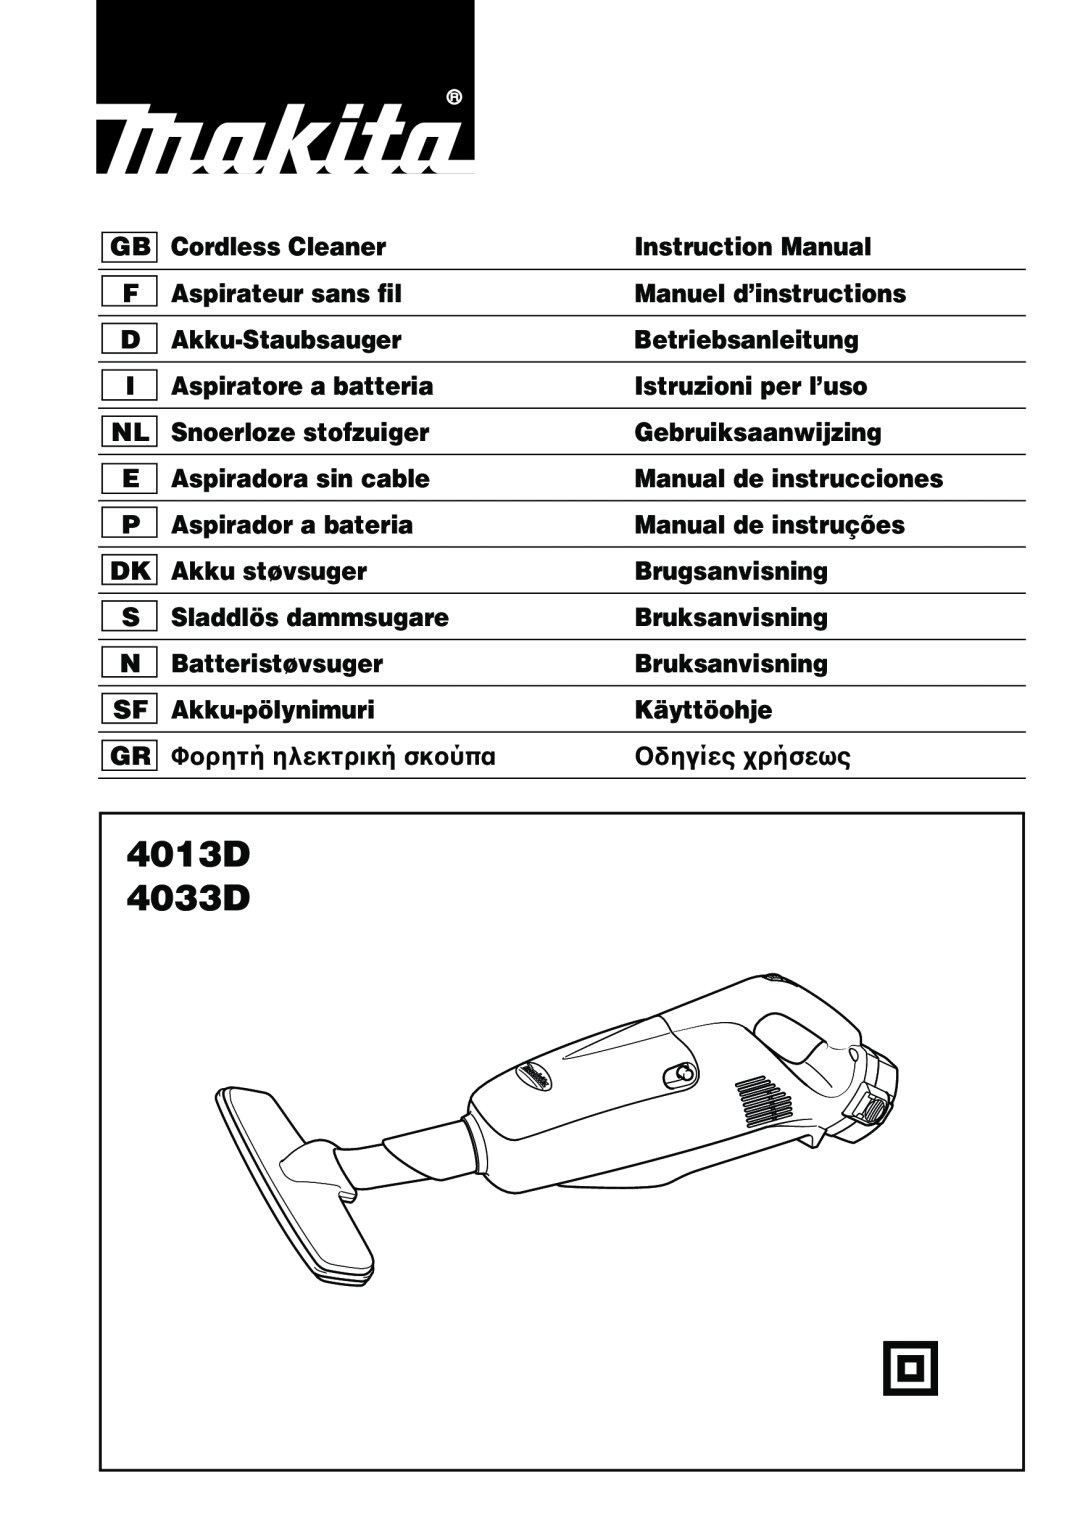 Makita instruction manual 4013D 4033D, Φρητή ηλεκτρική σκπα, δηγίες ήσεως 